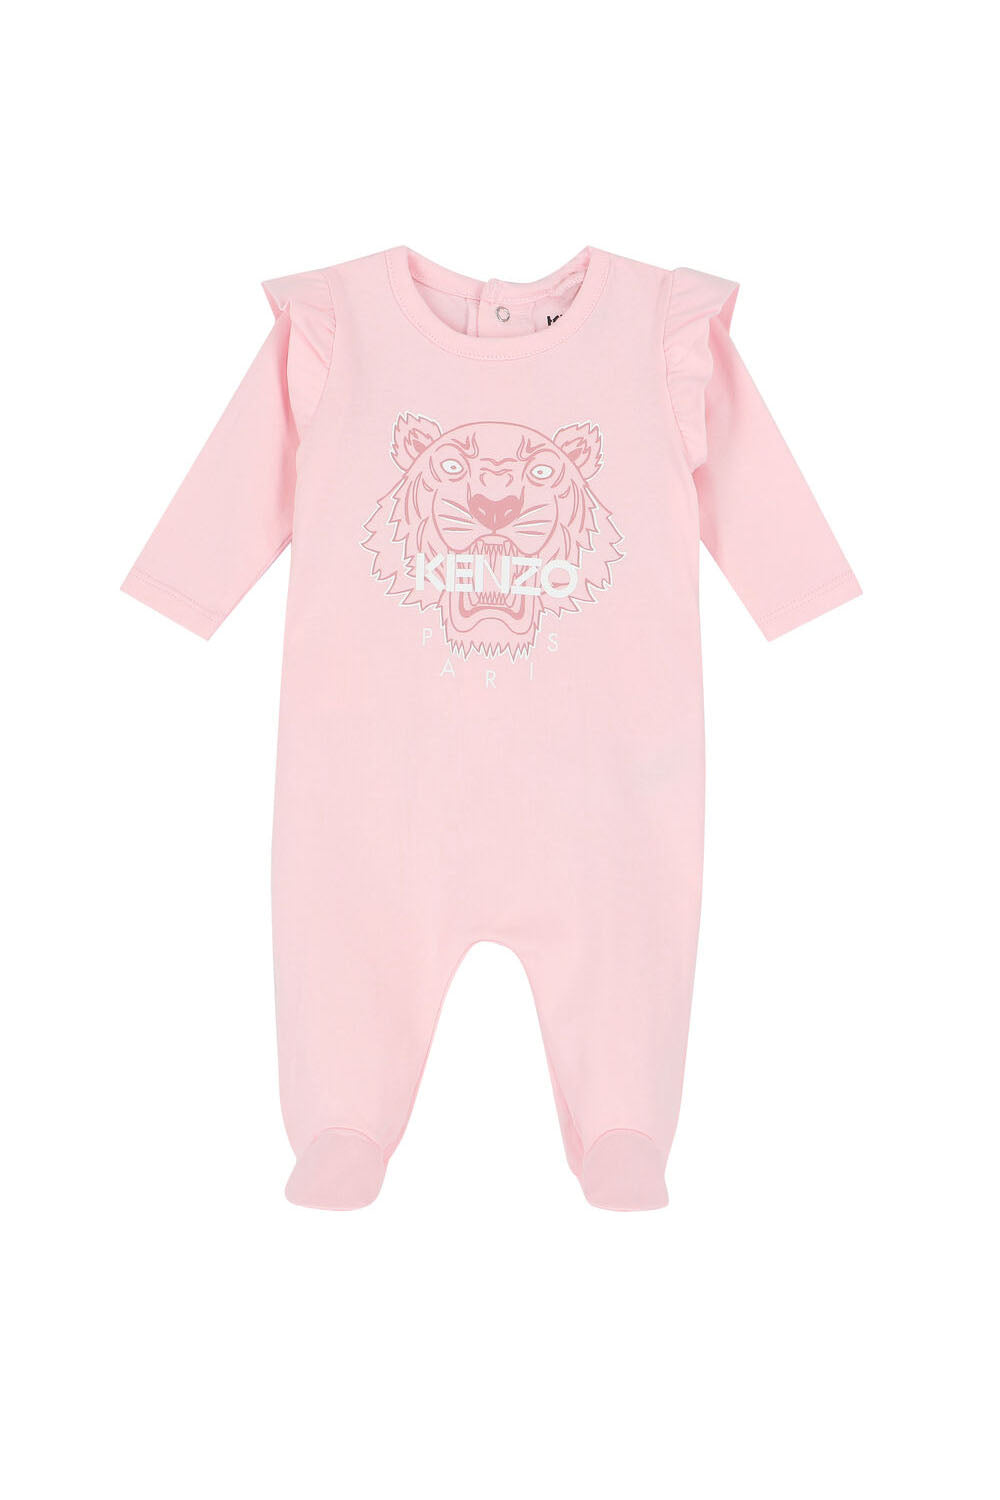 Tiger print Pyjamas New Born Girls - Maison7